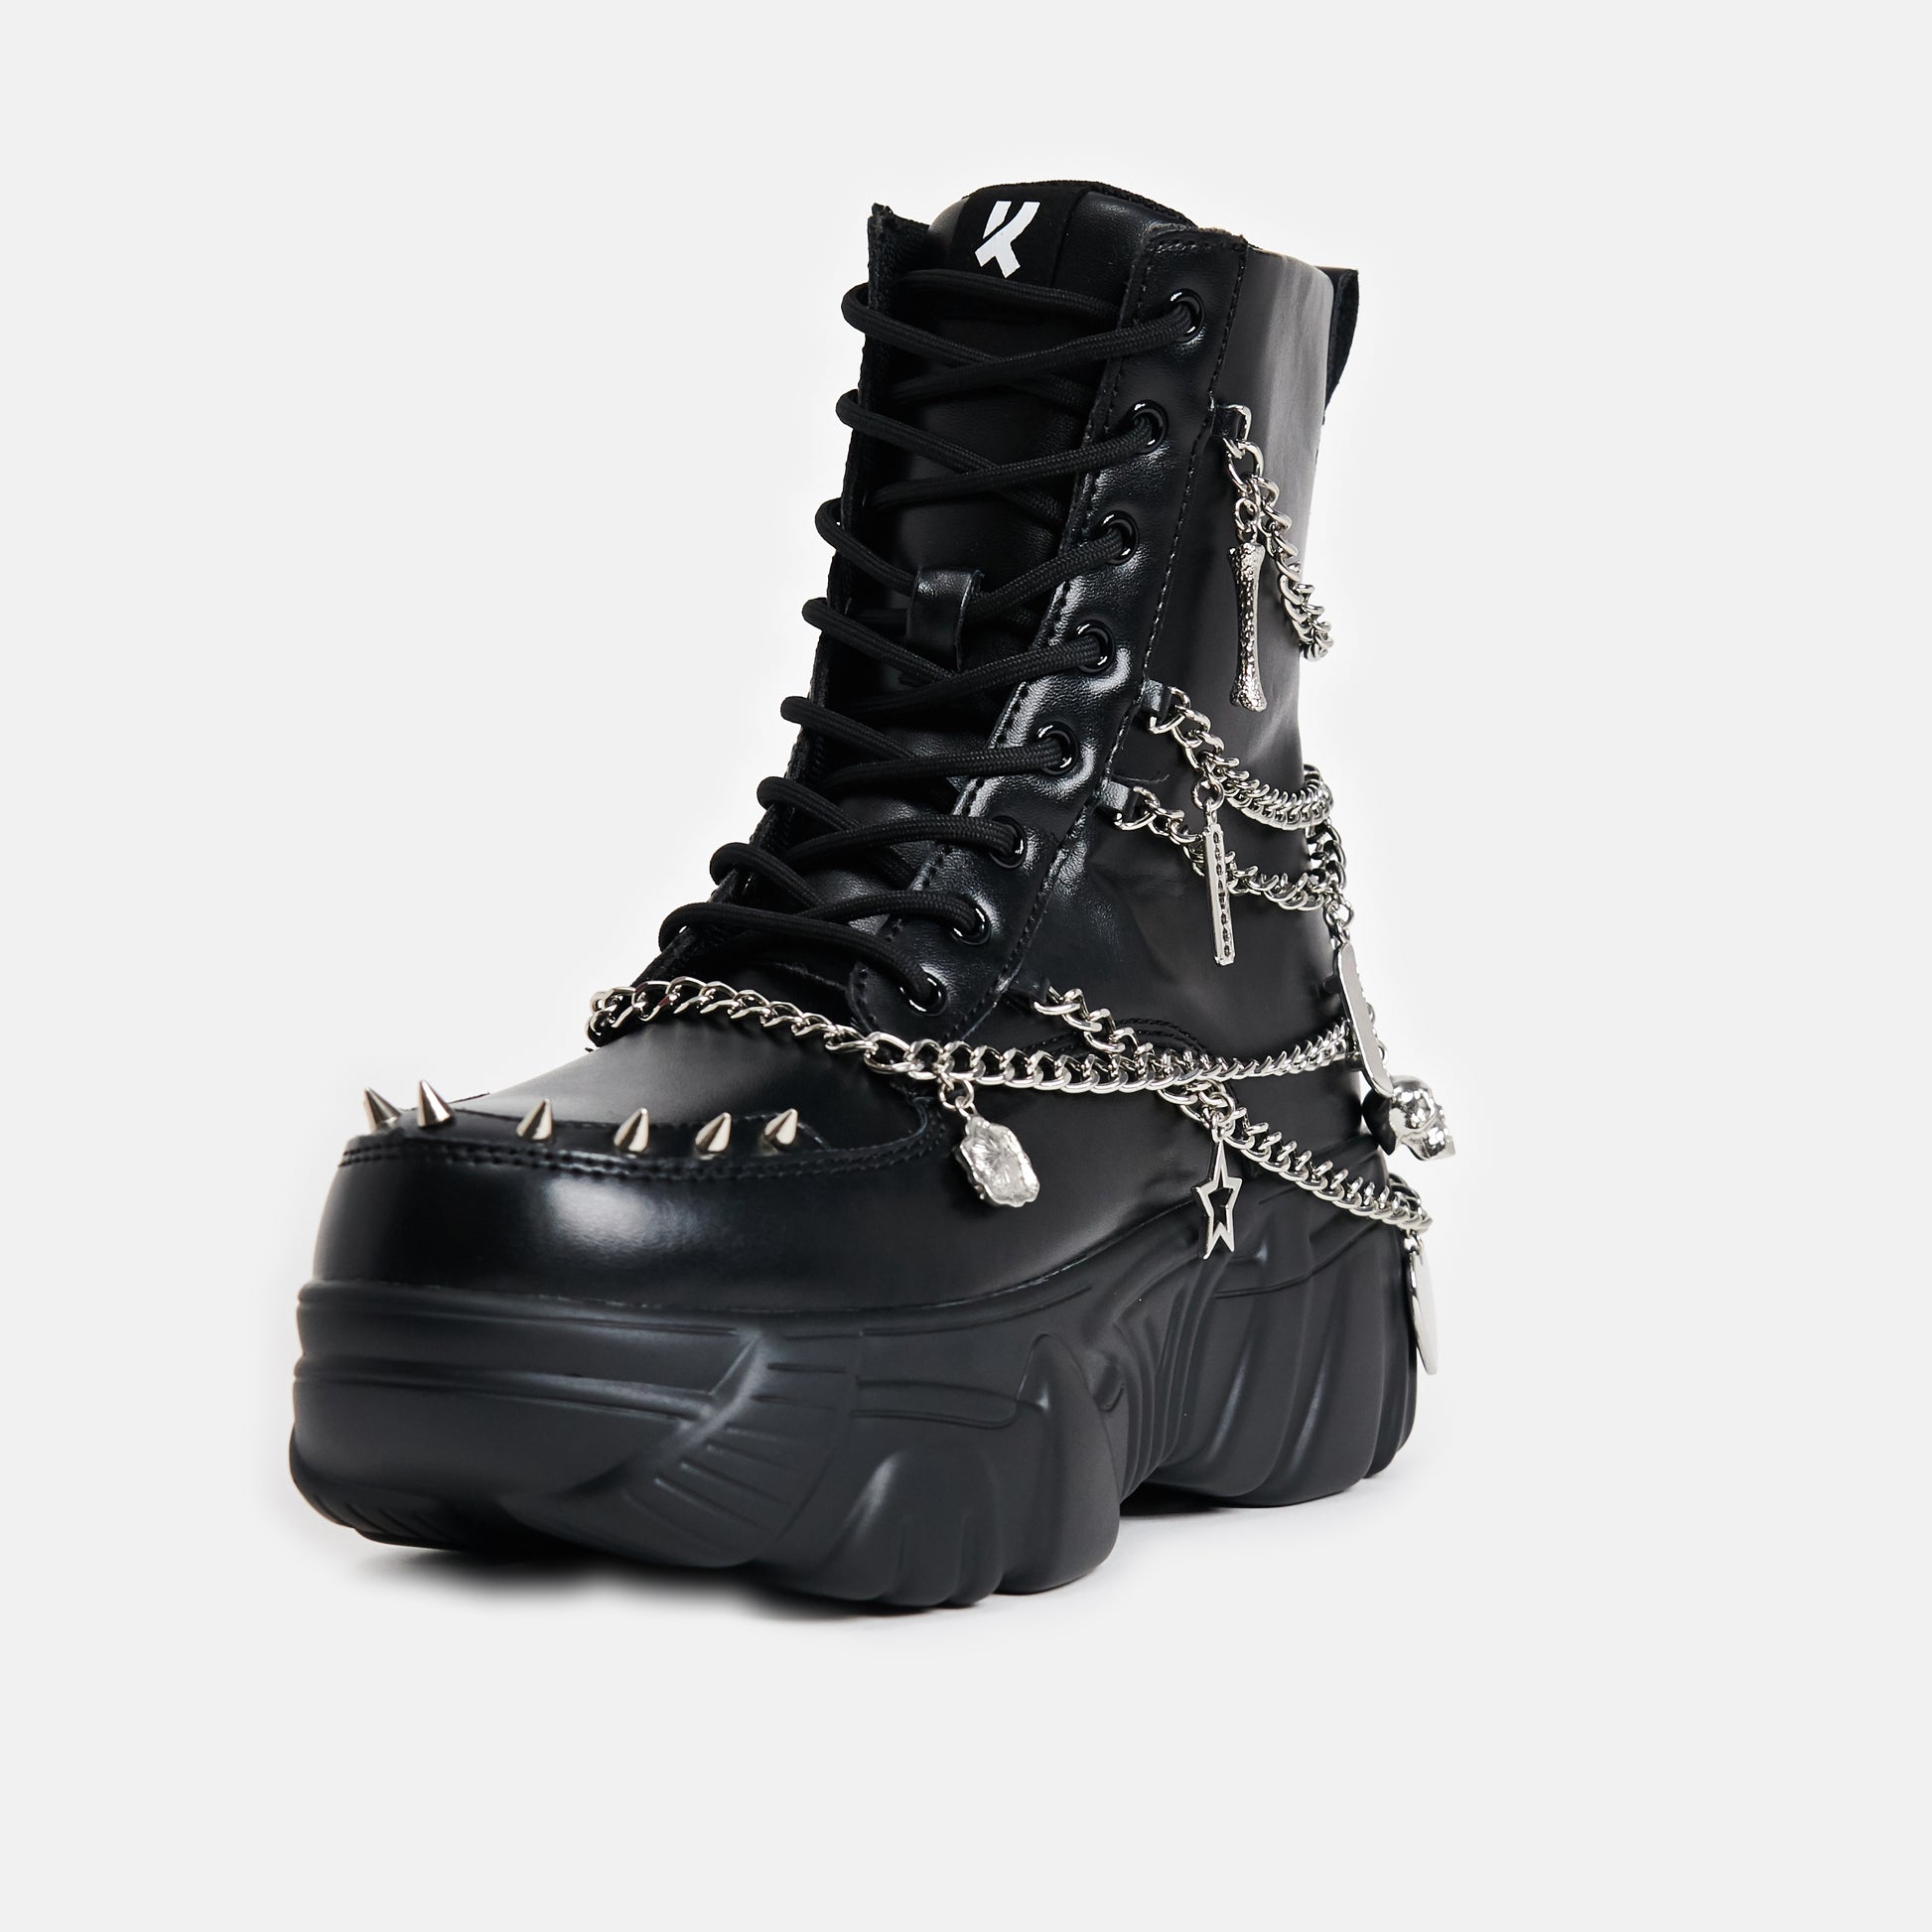 Boned Catch Black Mystic Charm Boots - Ankle Boots - KOI Footwear - Black - Platform Detail